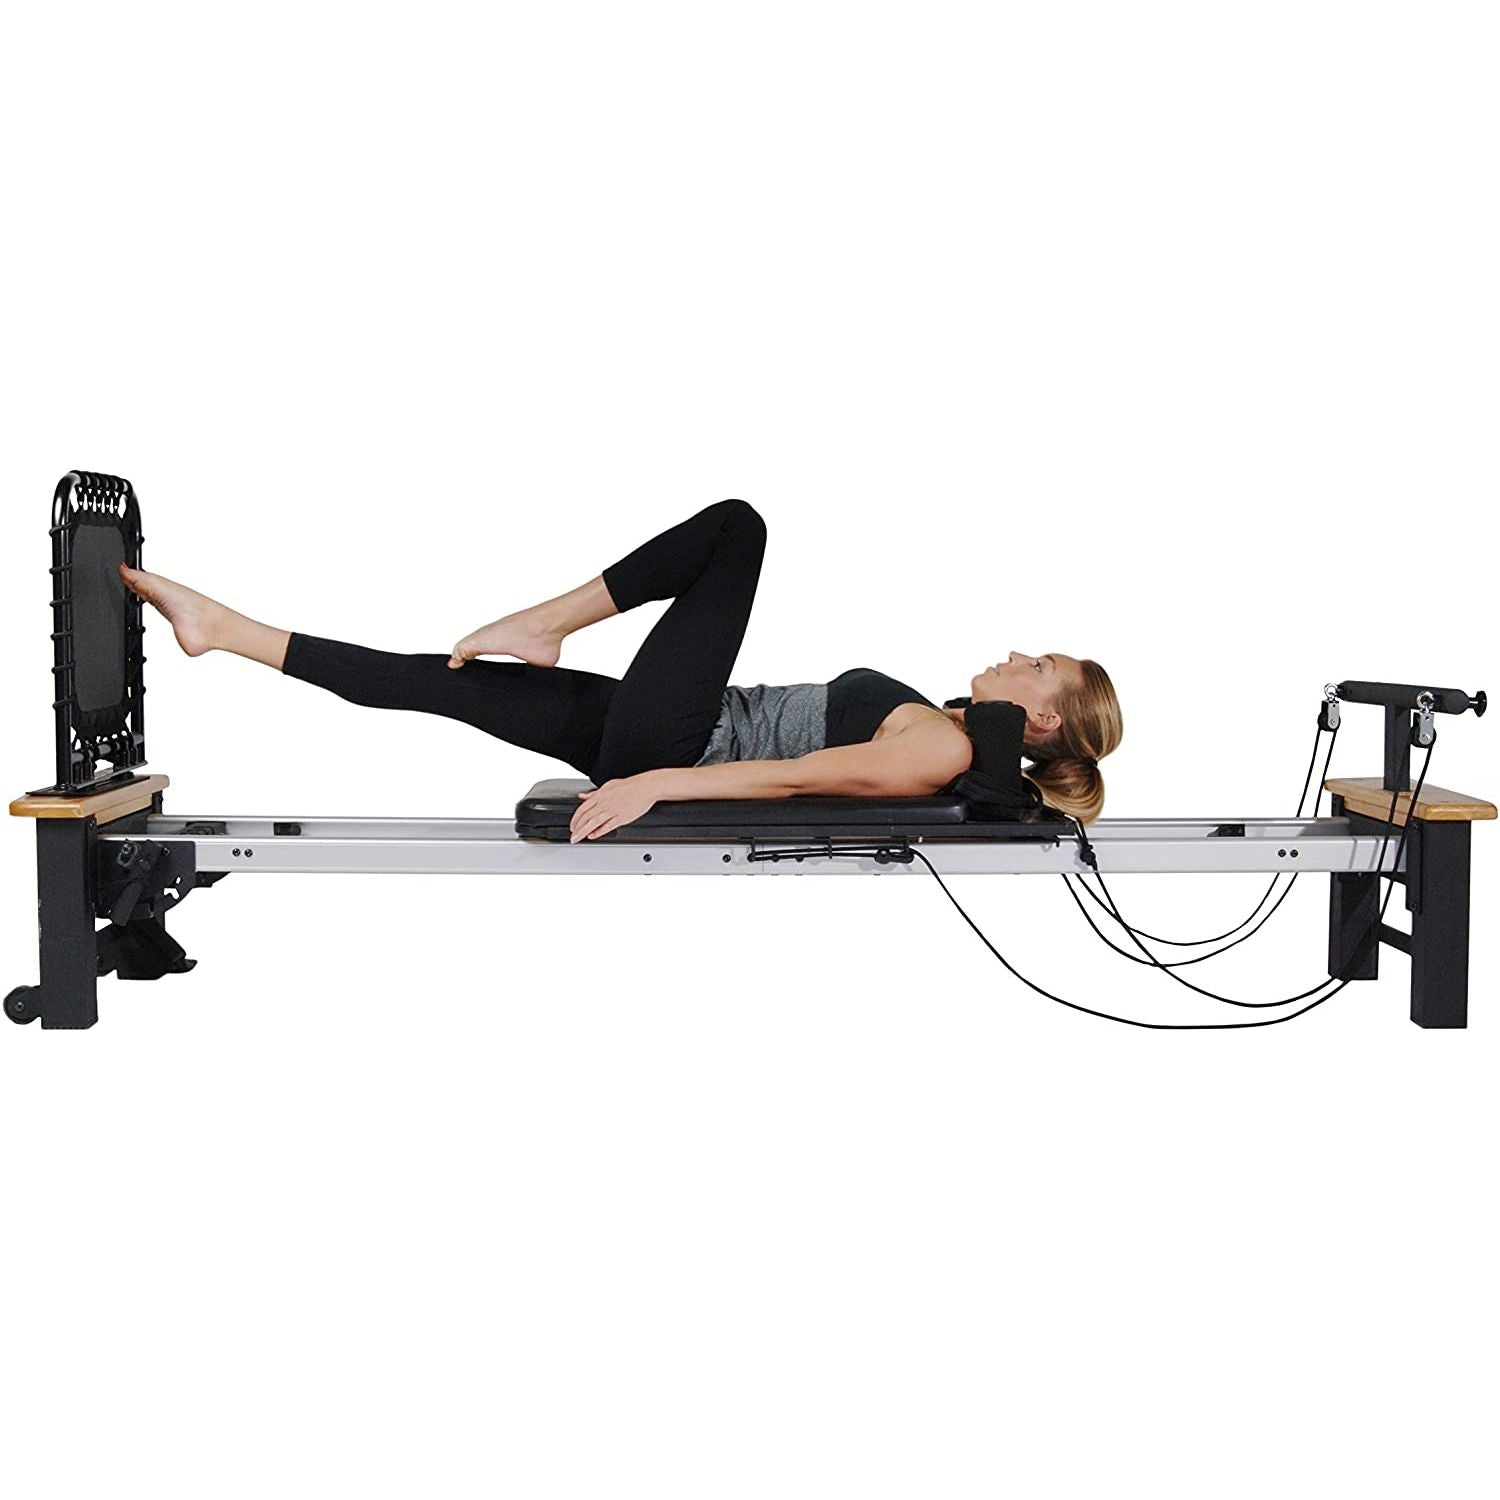 AeroPilates Reformer Pilates Reformer Workout Machine Home Gym for